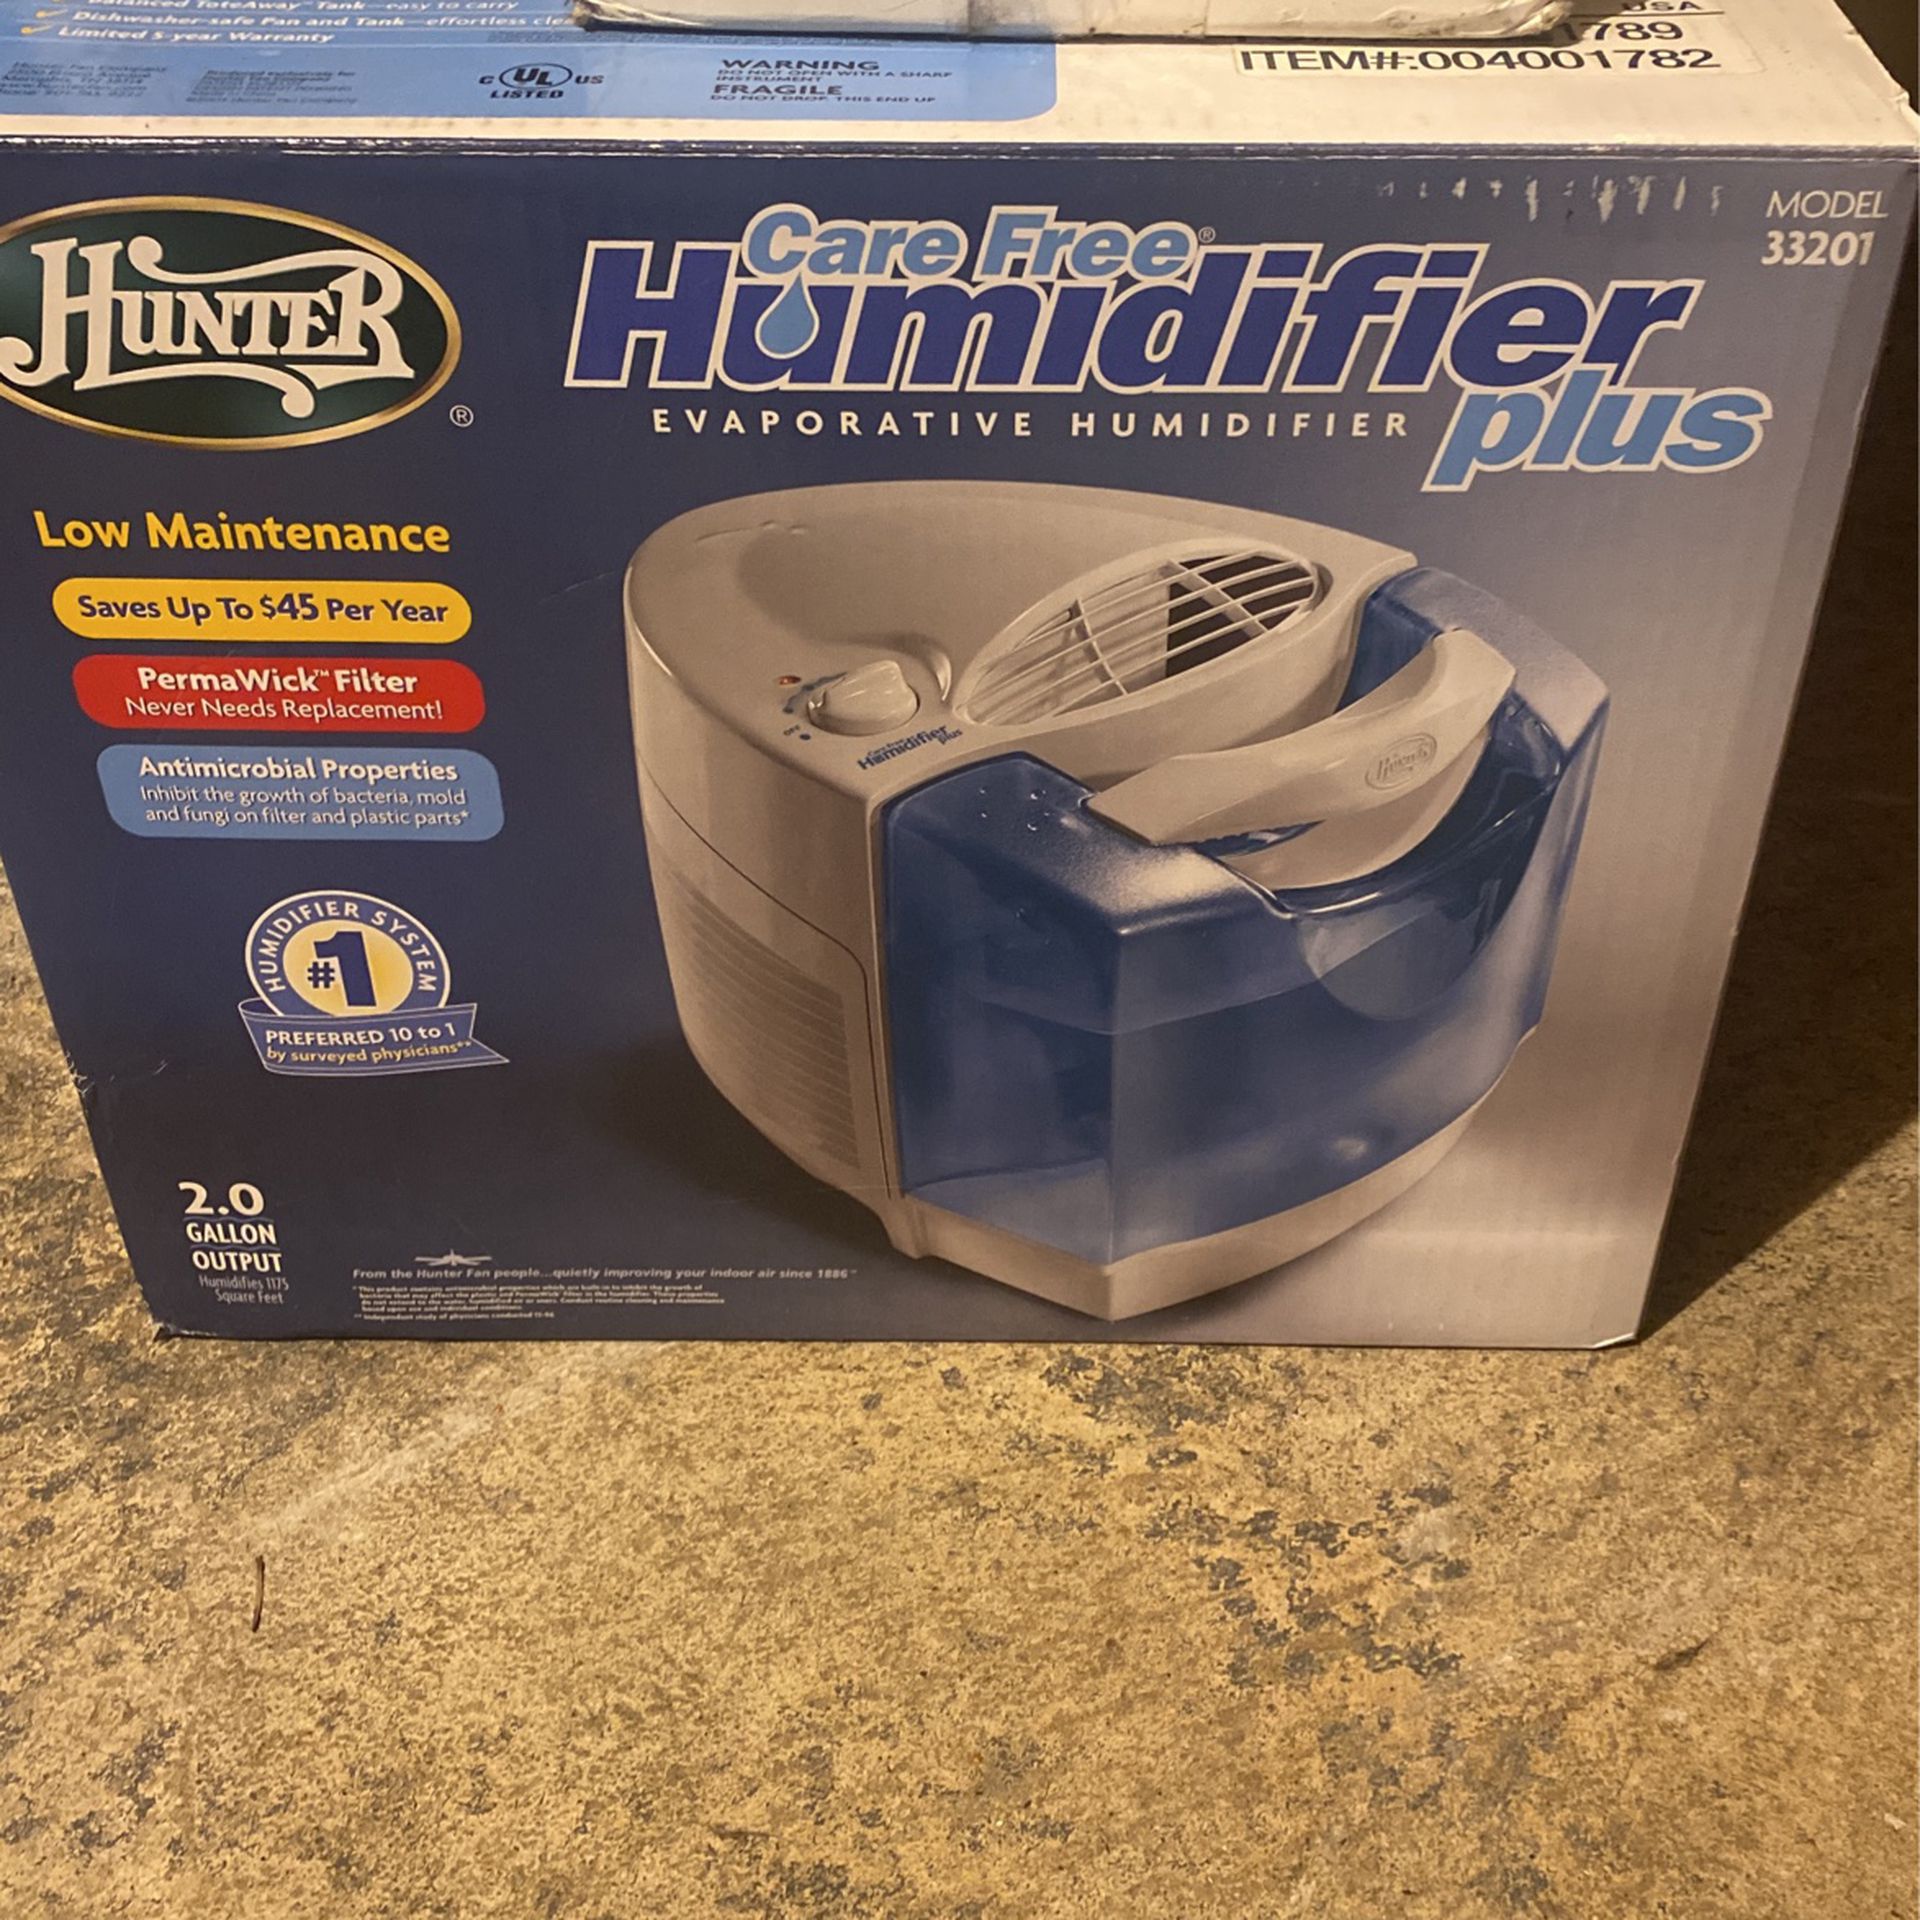 Care feee humidifier 